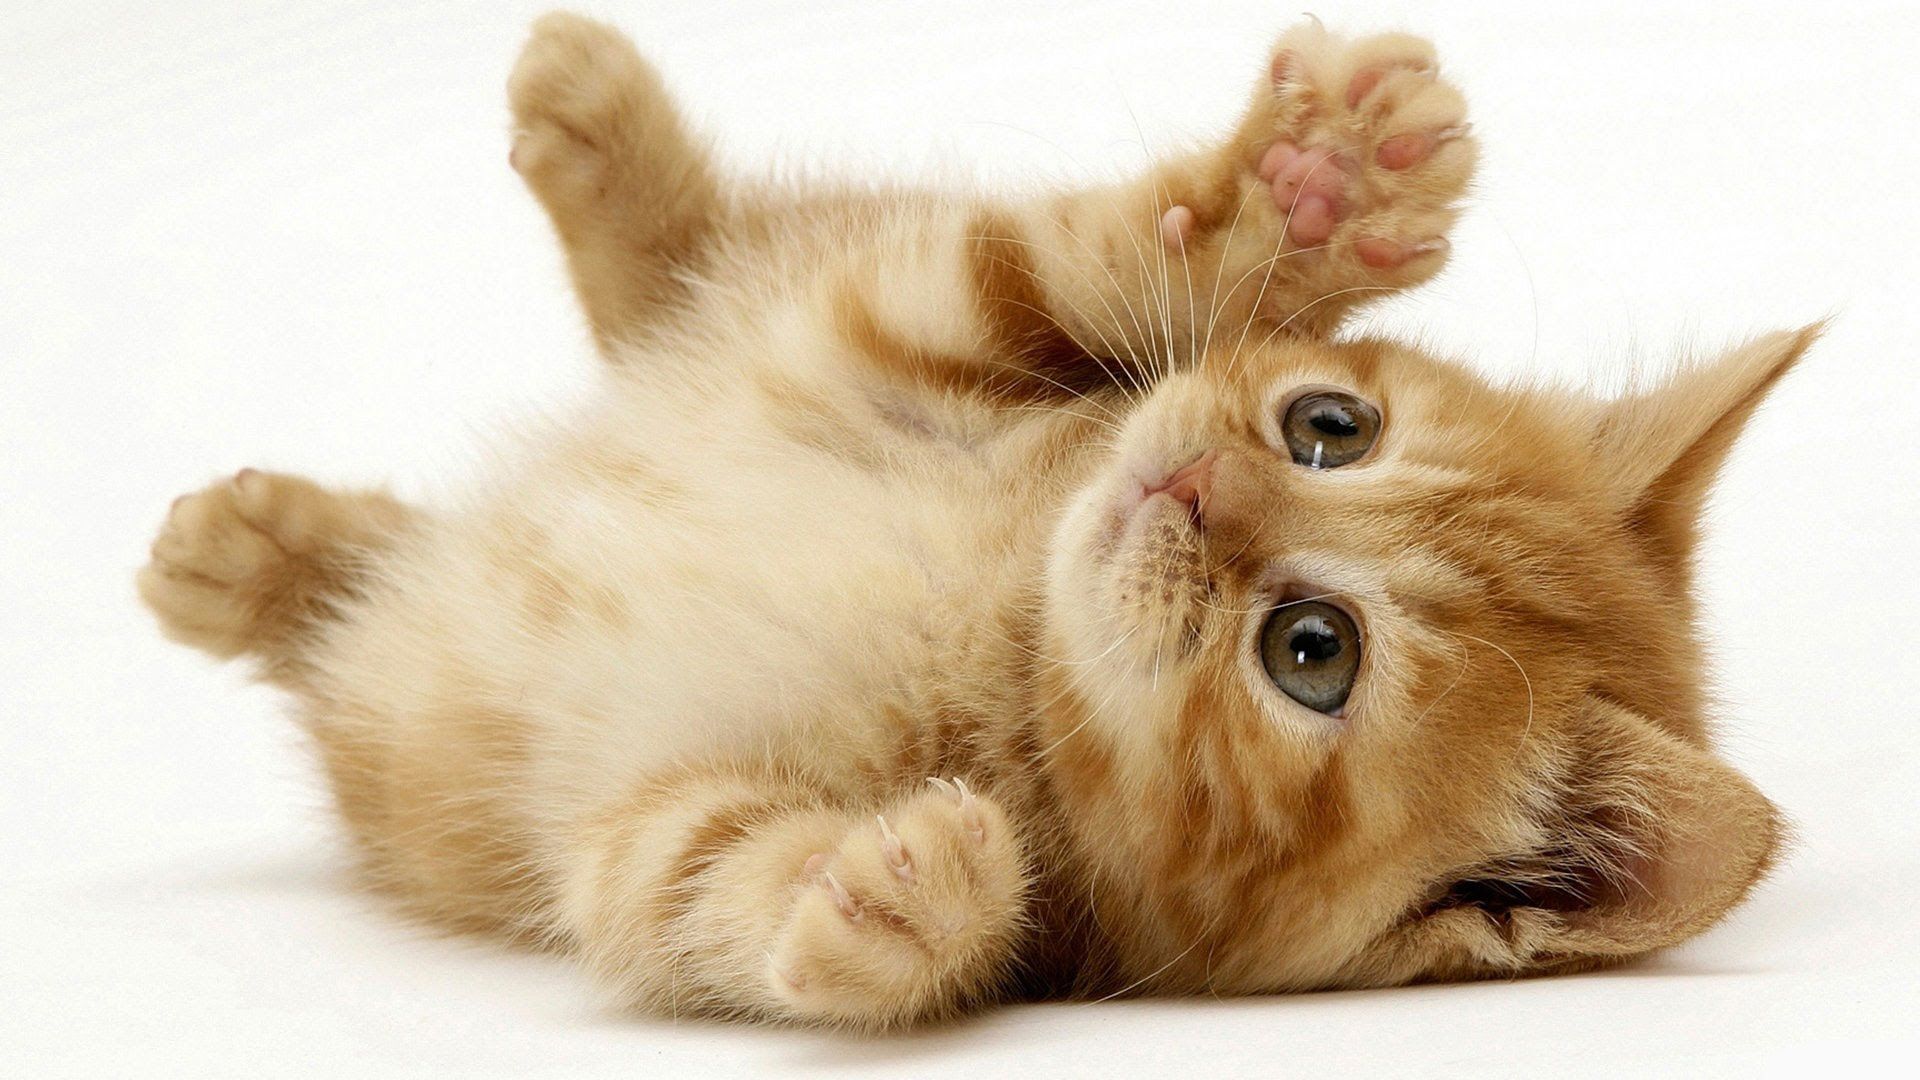 Cute Kitten Animal Pics Cats Image Gallery